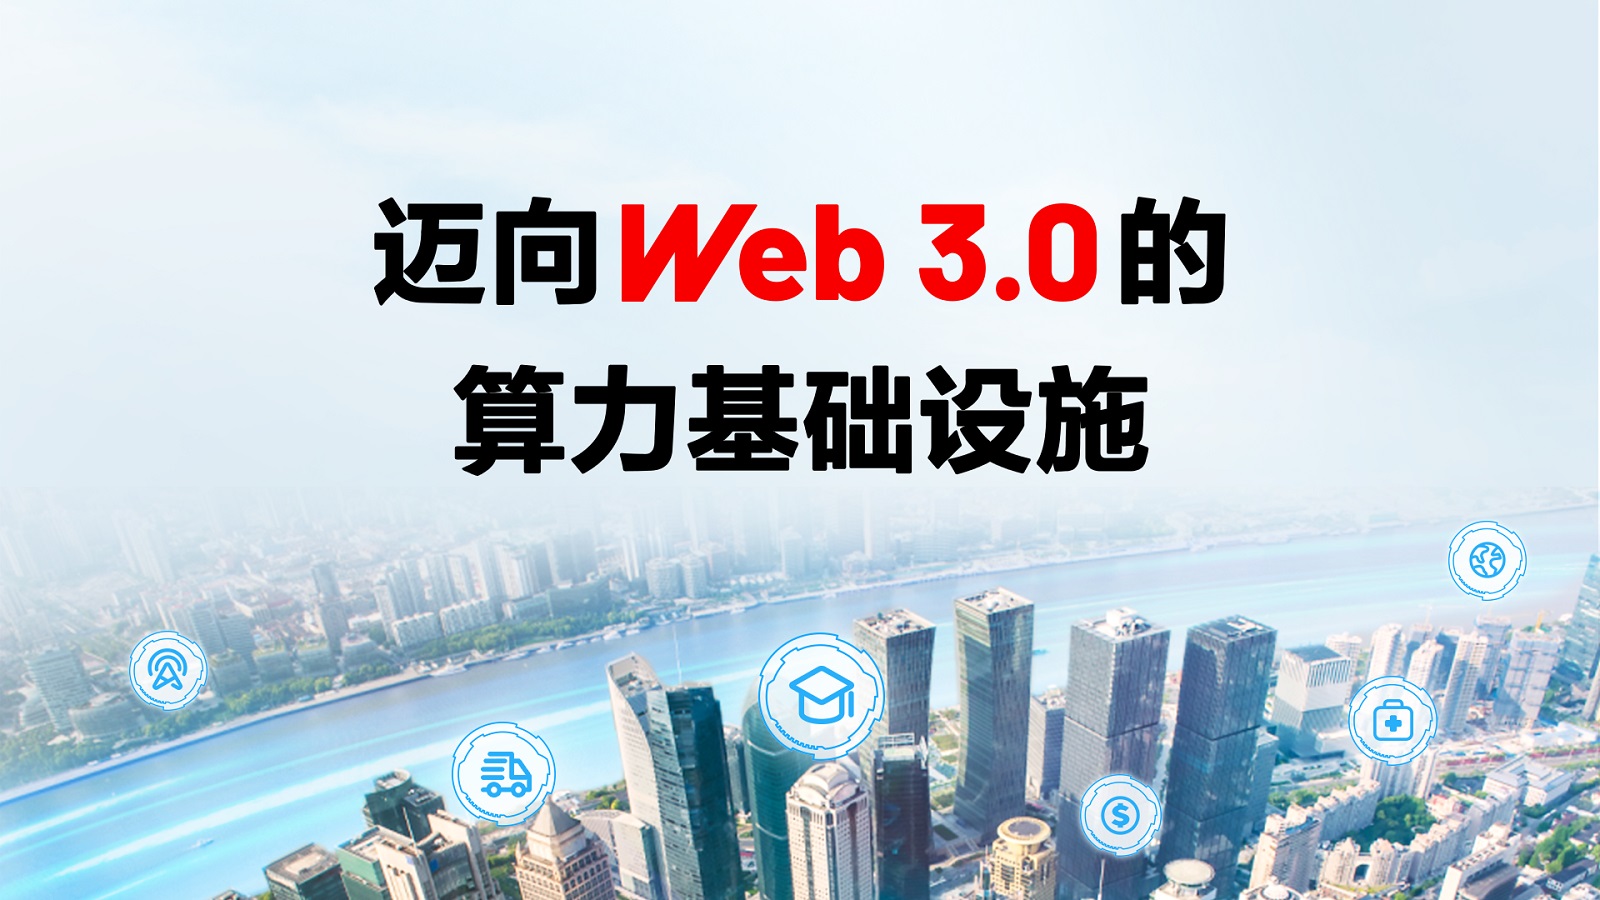 Web 3.0崛起，各行业如何创新应对？